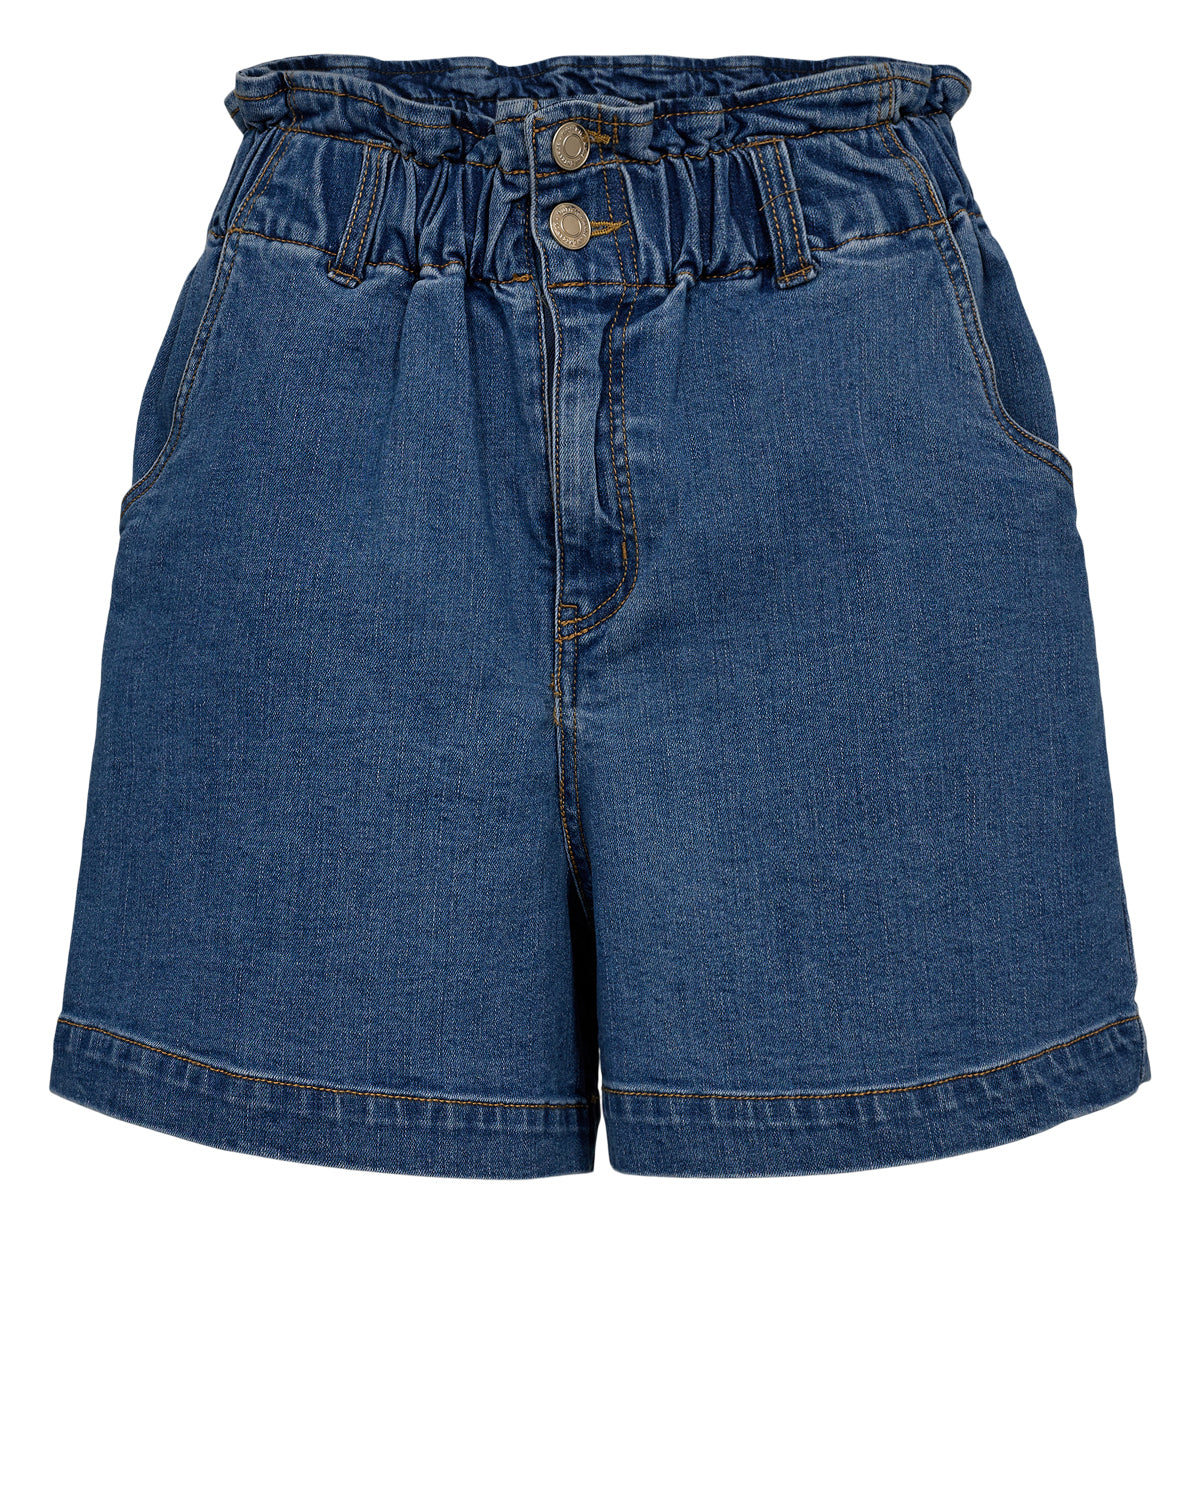 Numph nululu denim shorts - Medium blue denim